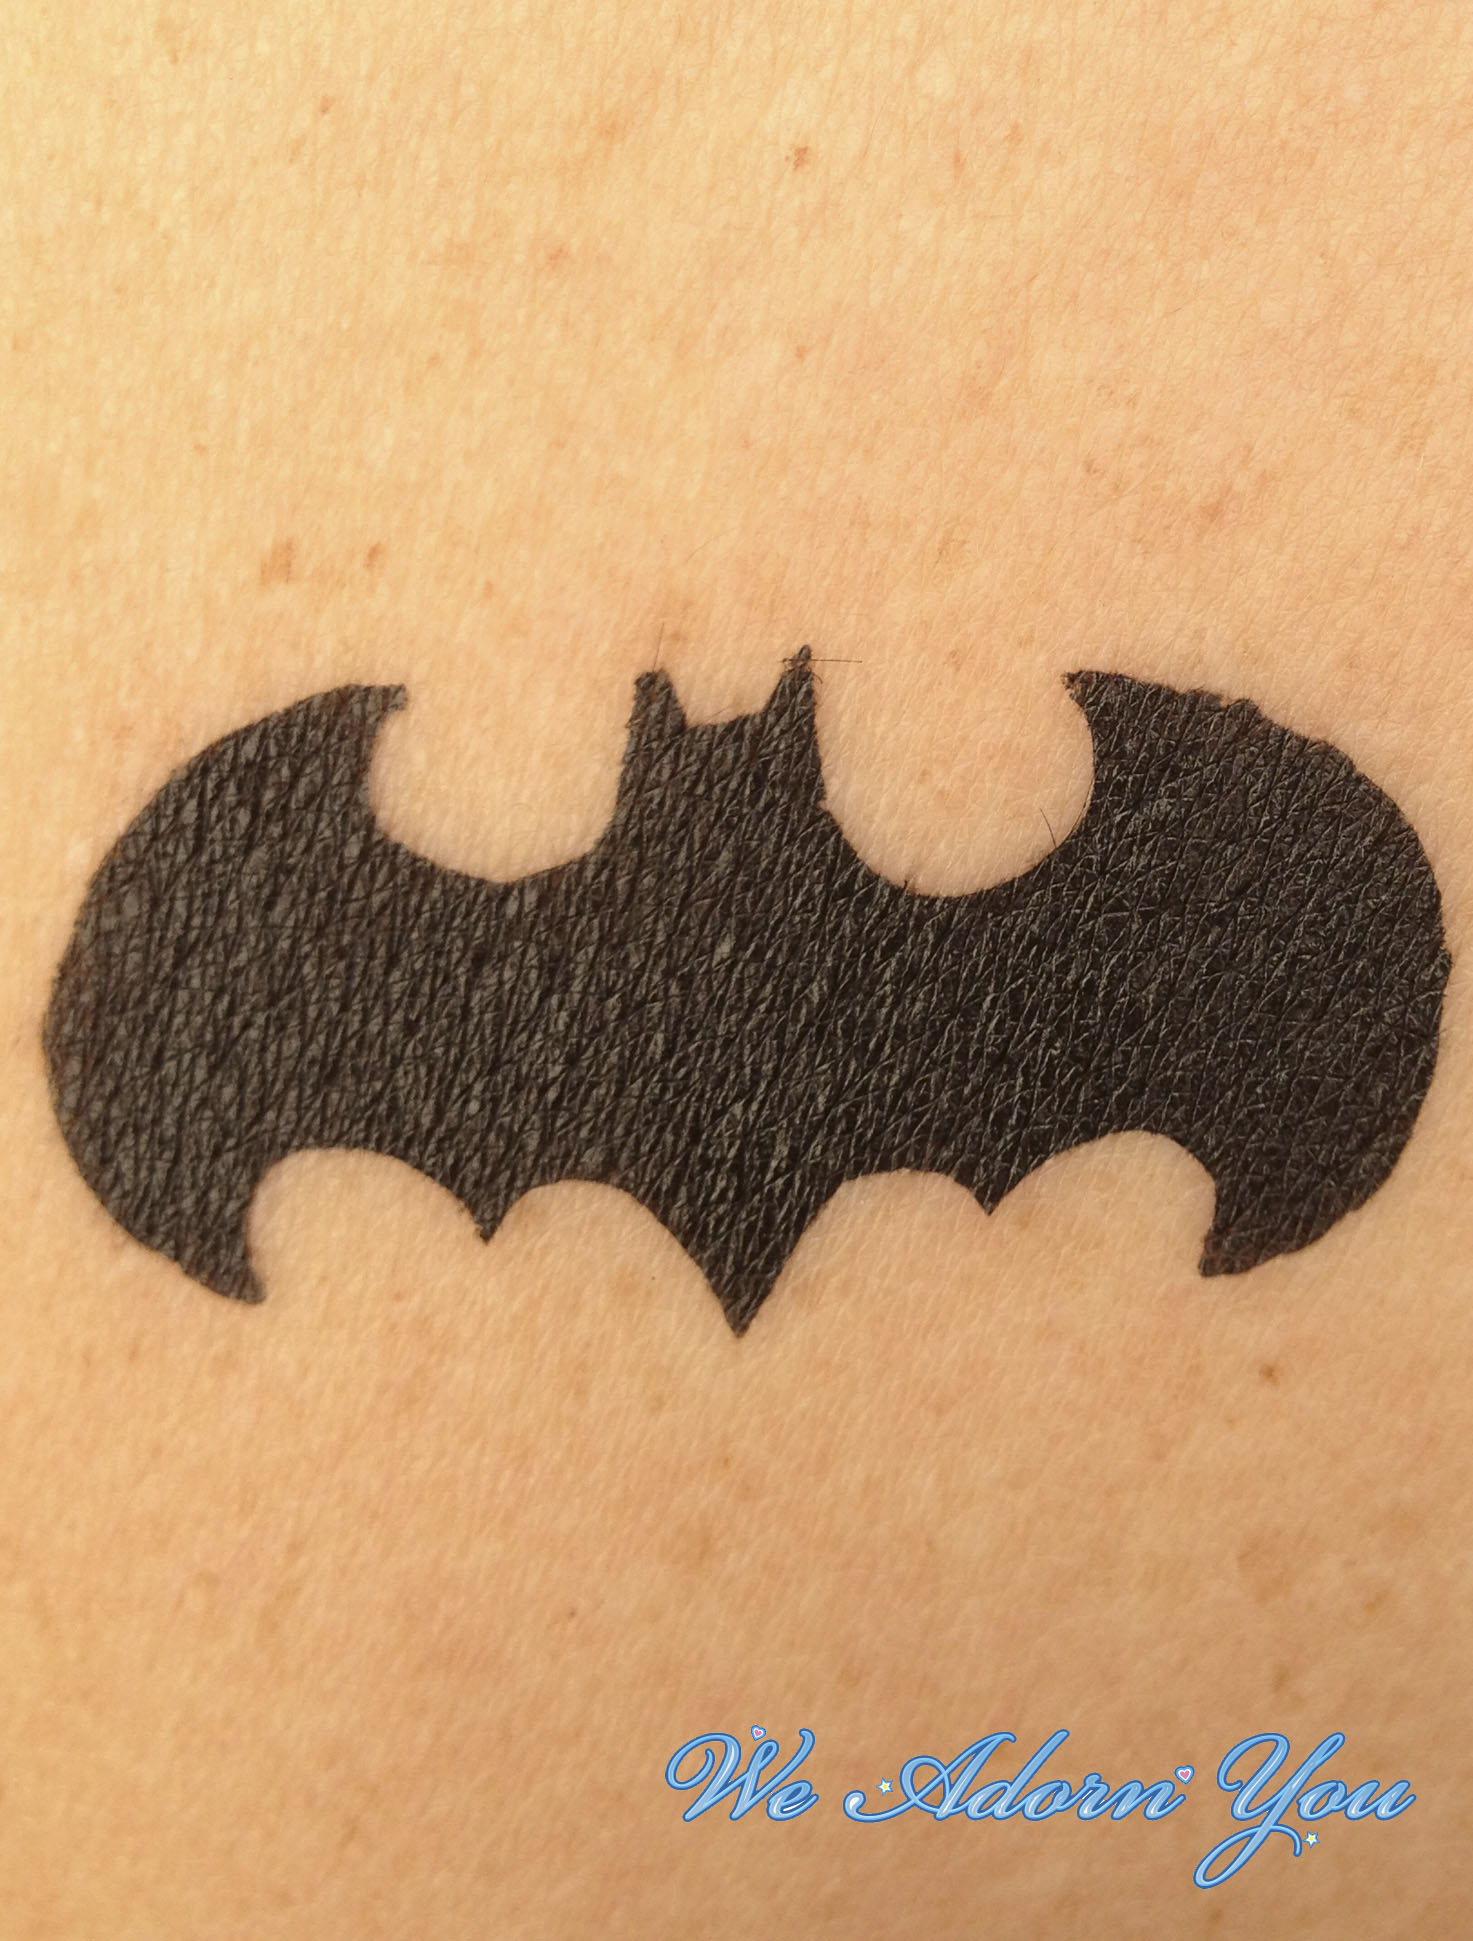 Airbrush Tattoo Batman - We Adorn You.jpg